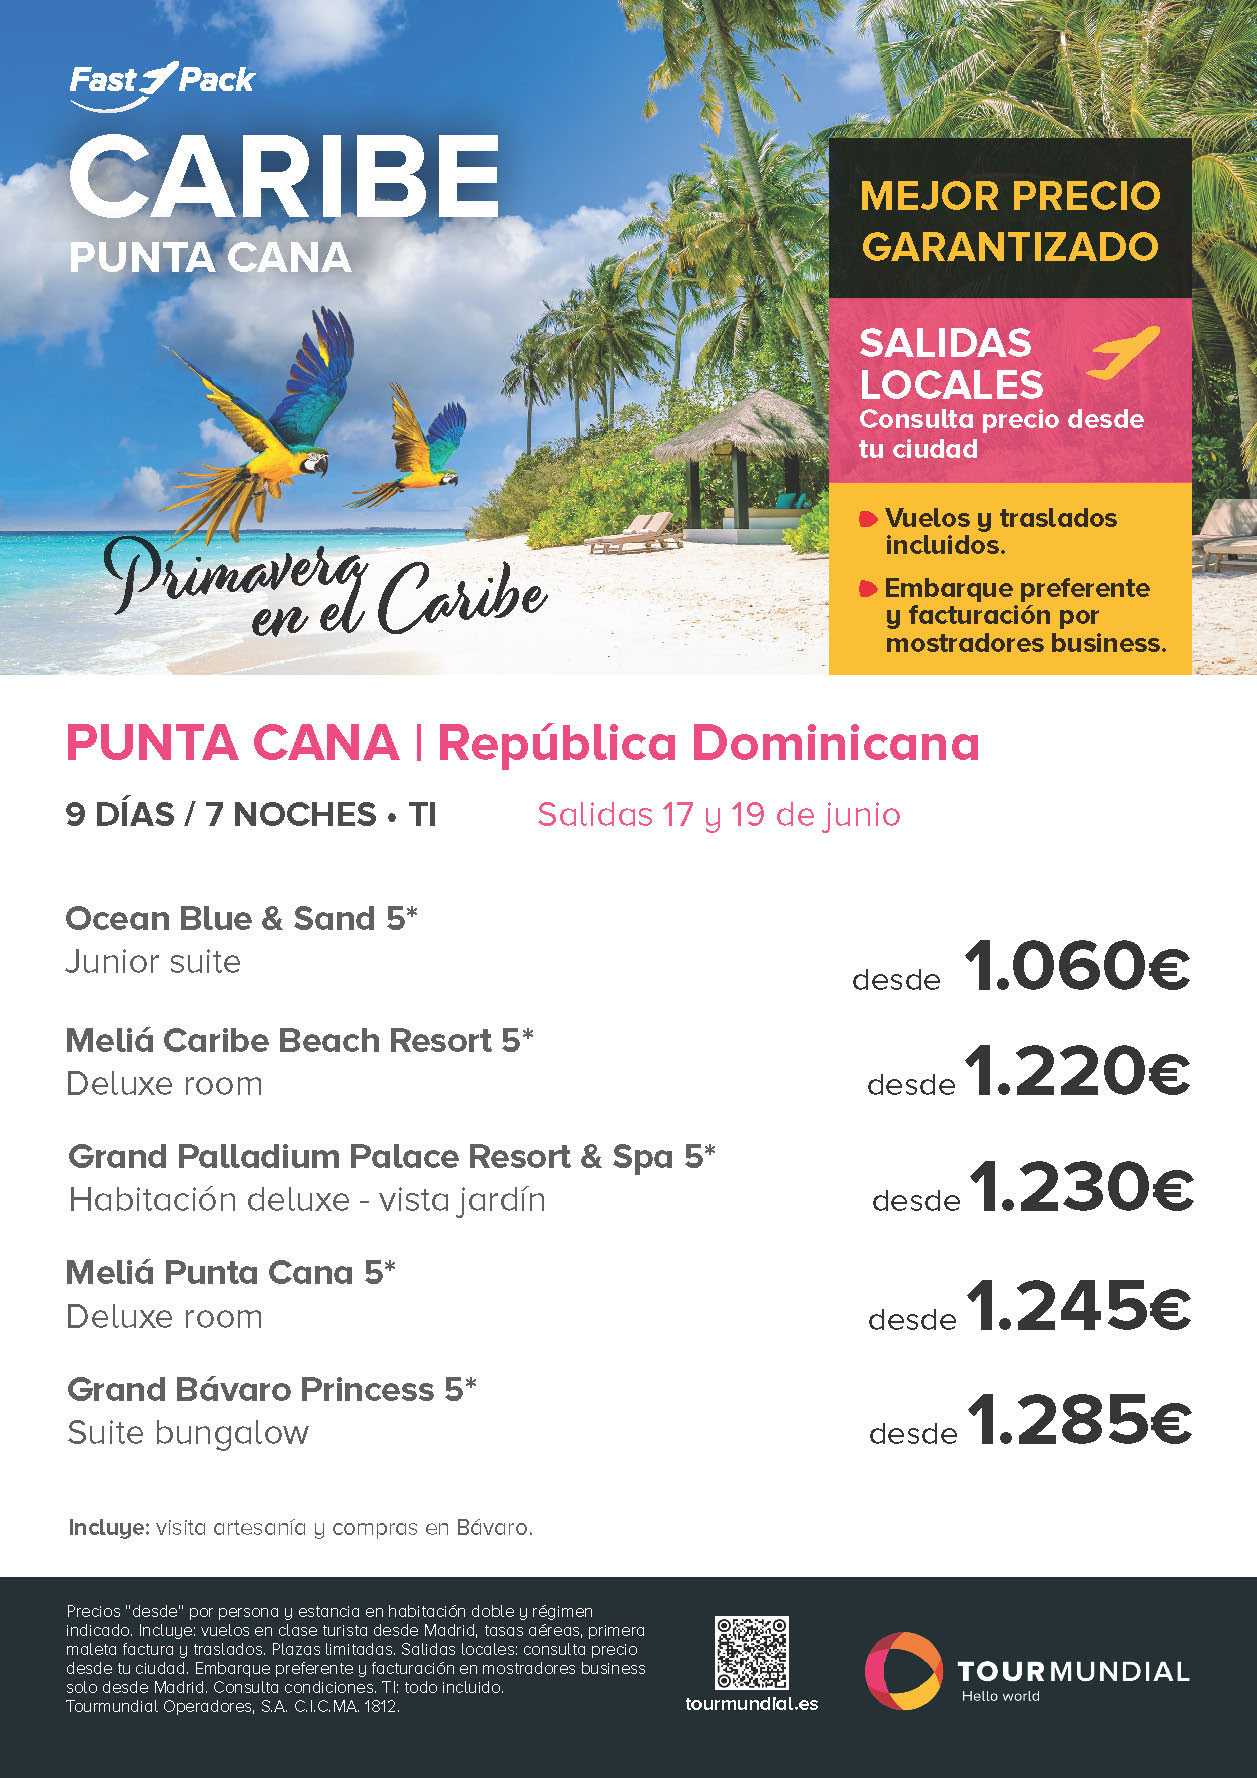 Oferta Tourmundial Junio 2023 Fast Pack Caribe Punta Cana 8 dias Todo Incluido salidas desde Madrid Bilbao Valencia Malaga Alicante Galicia Baleares